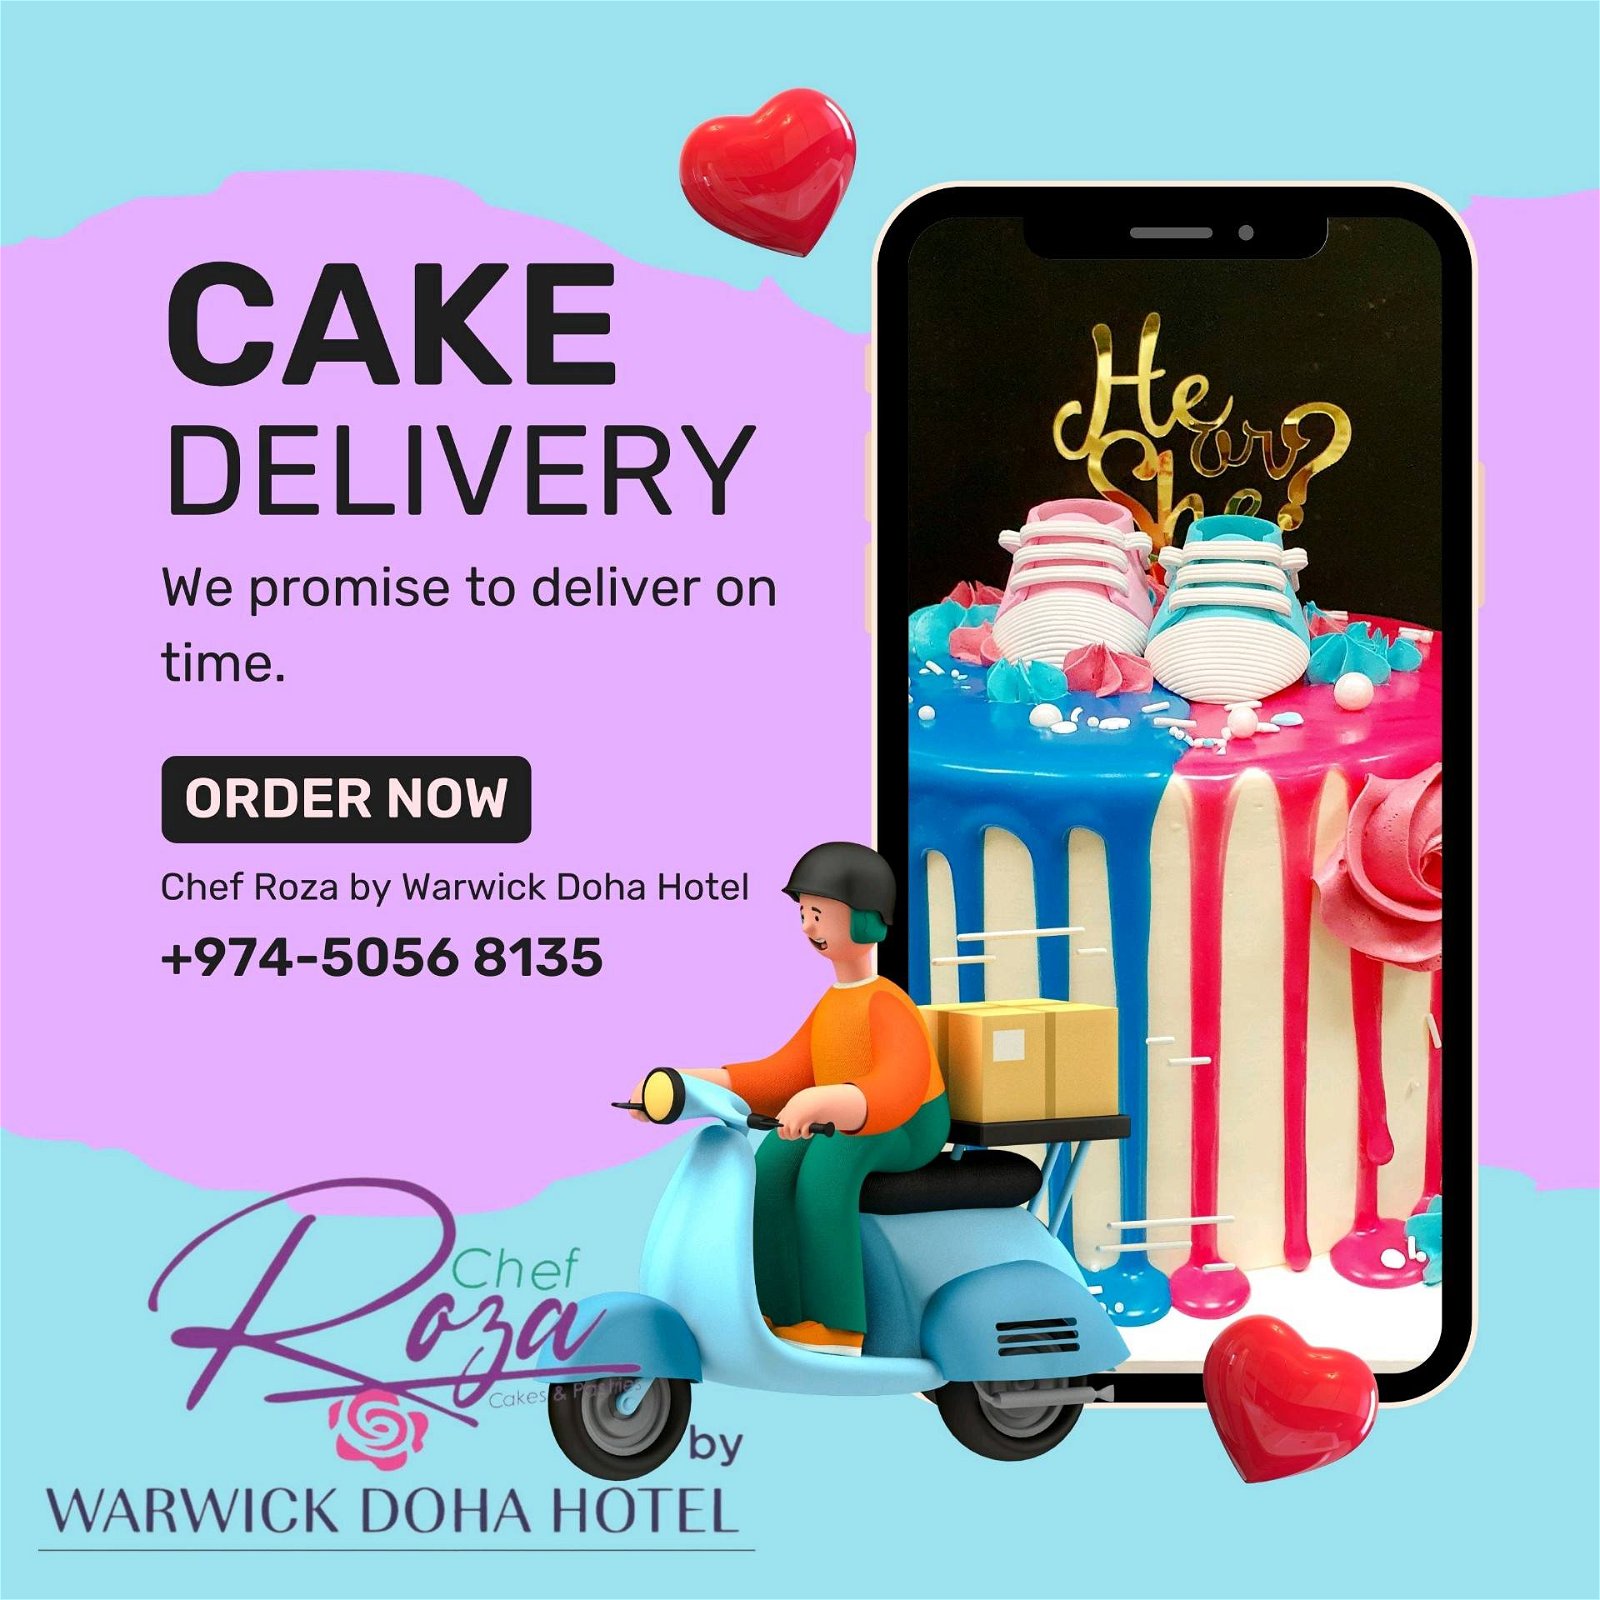 Online Cakes Delivery in Kolkata via Best Cake Shop - Indiagift